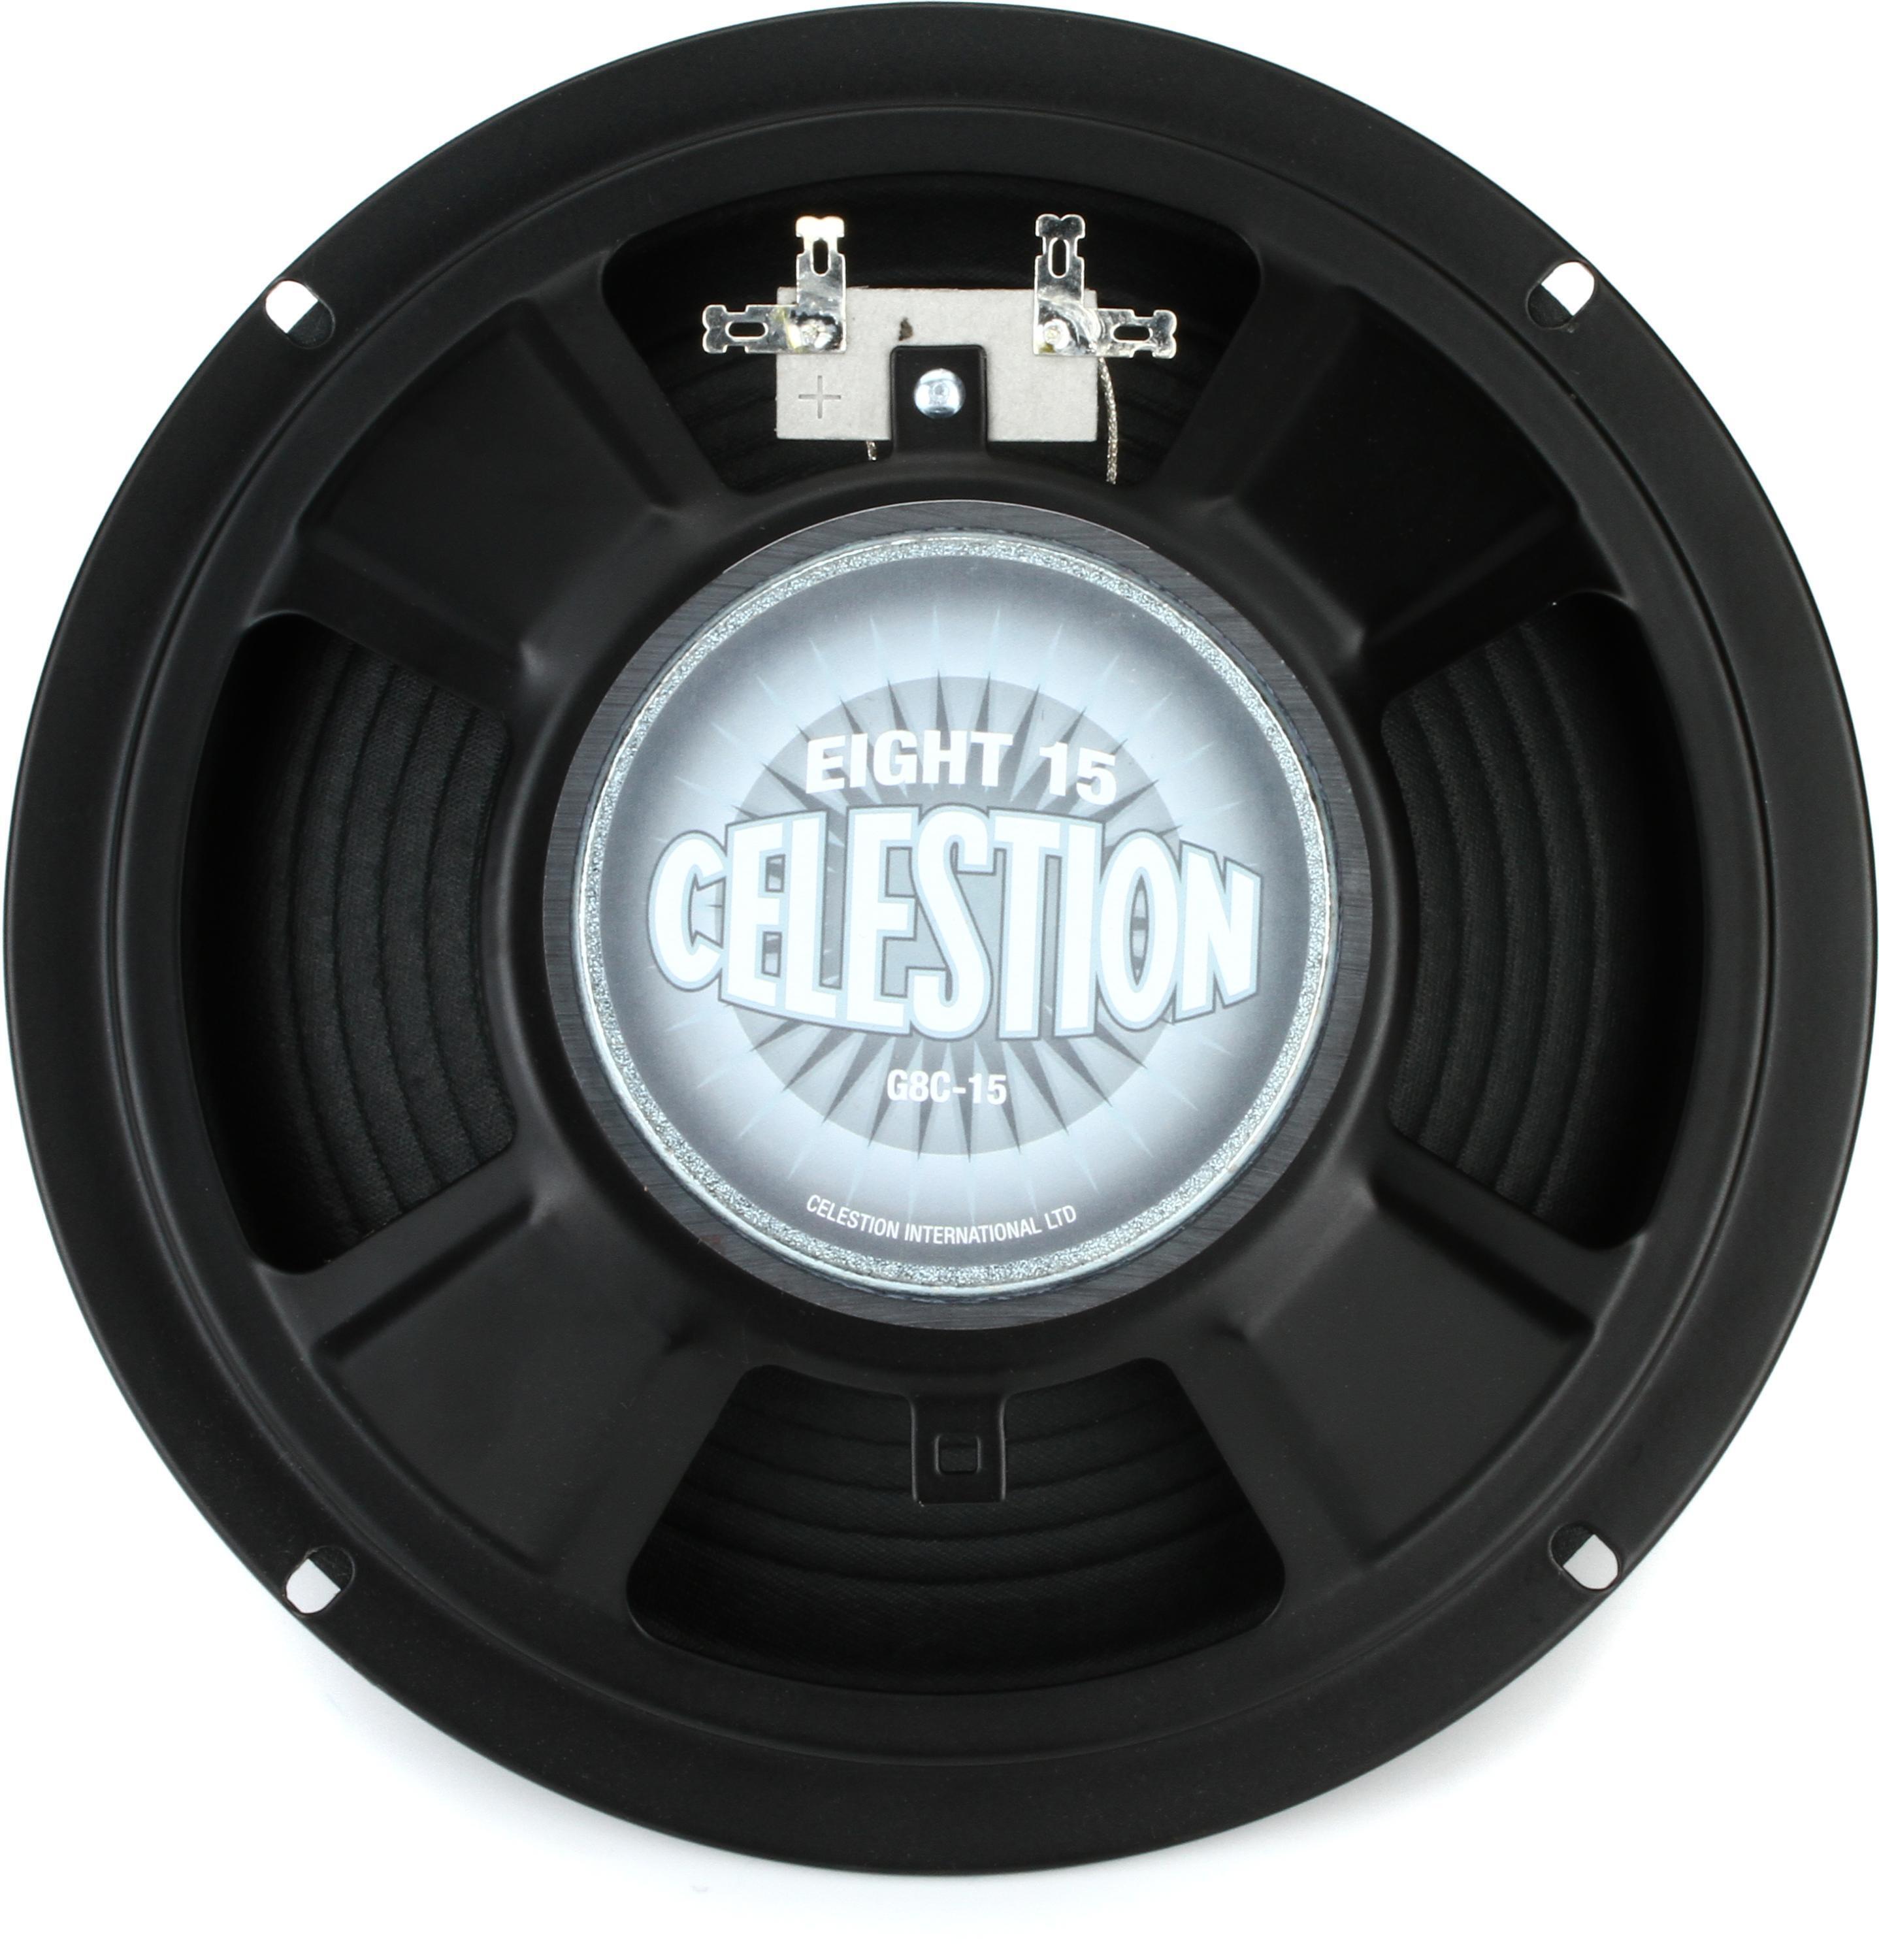 Celestion Eight  8 inch  watt Guitar Amp Replacement Speaker